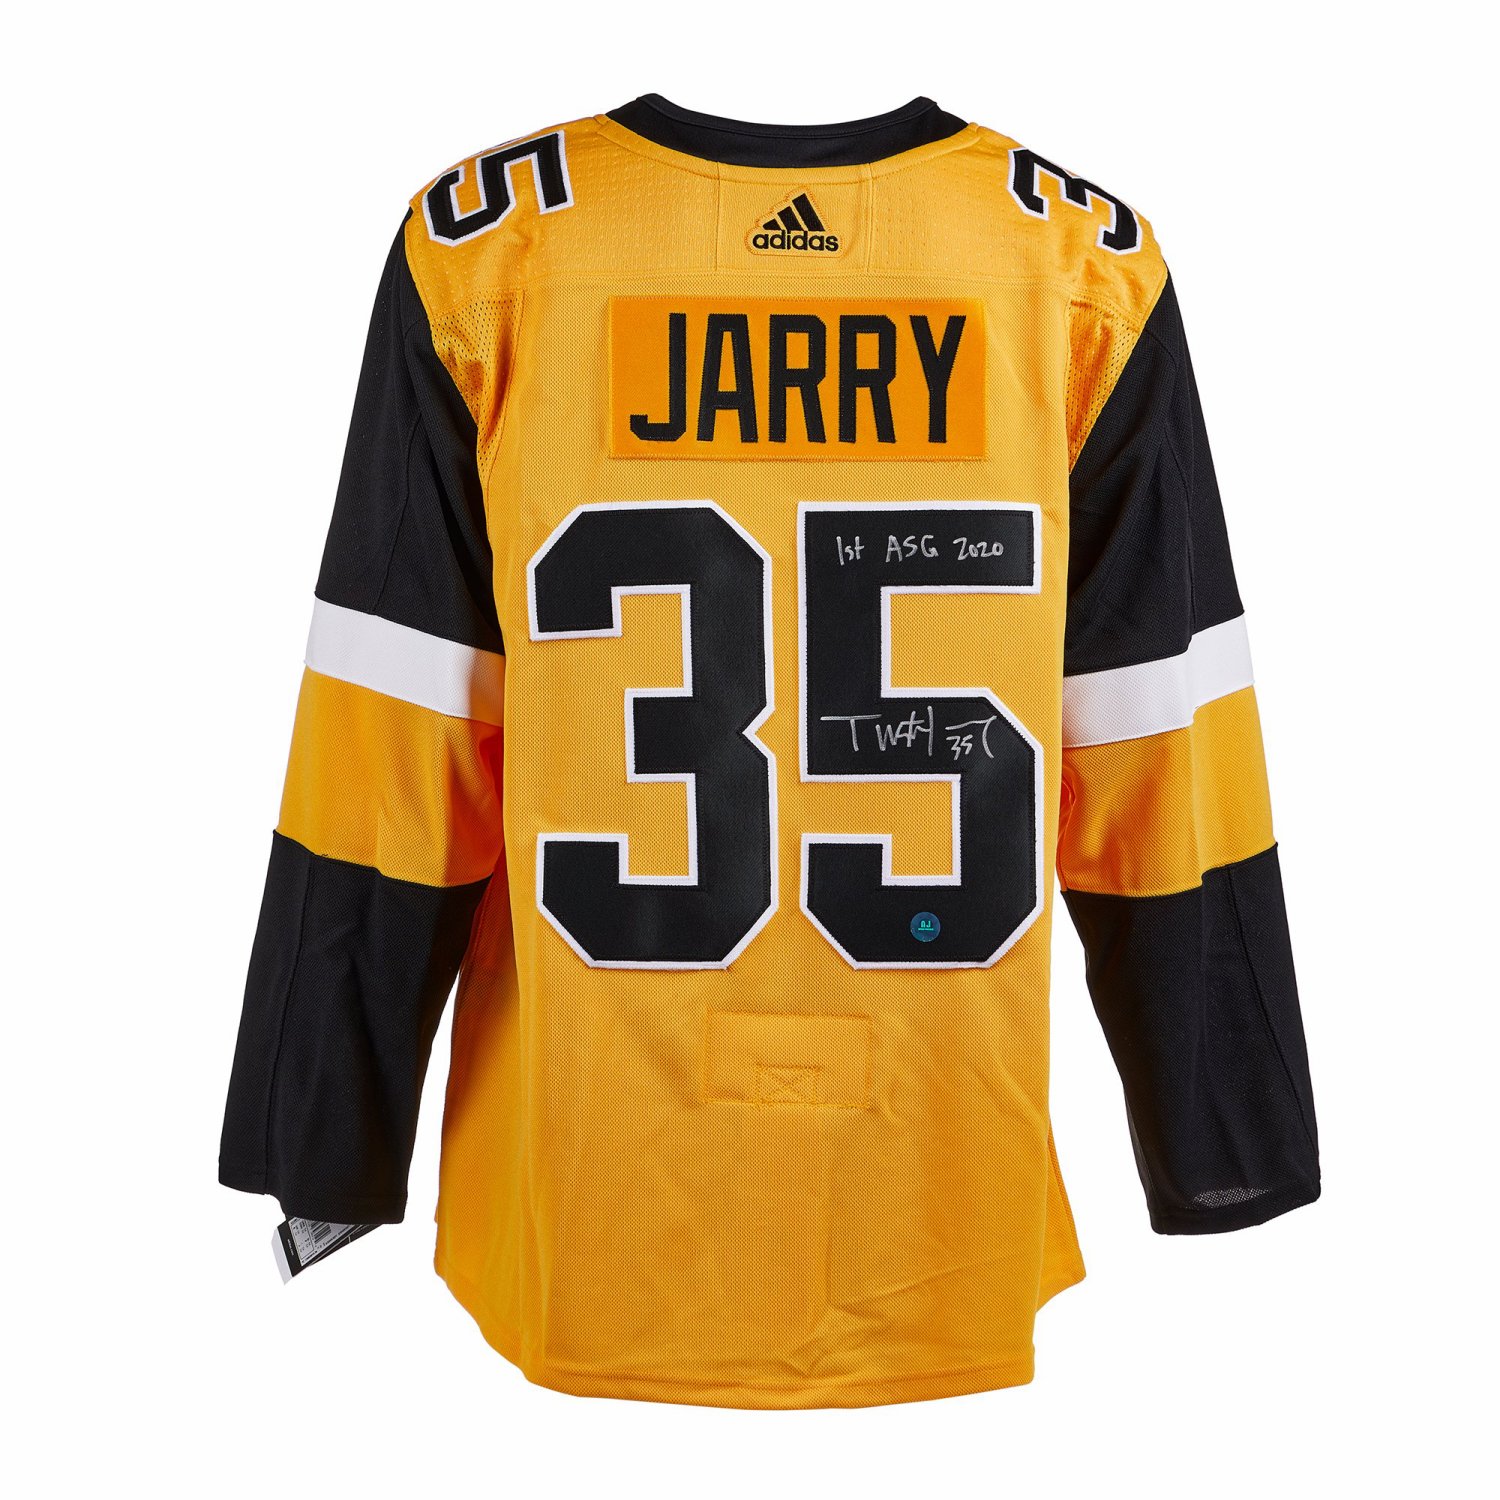 Tristan Jarry Autographed Signed Custom NHL Hockey Jersey Penguins